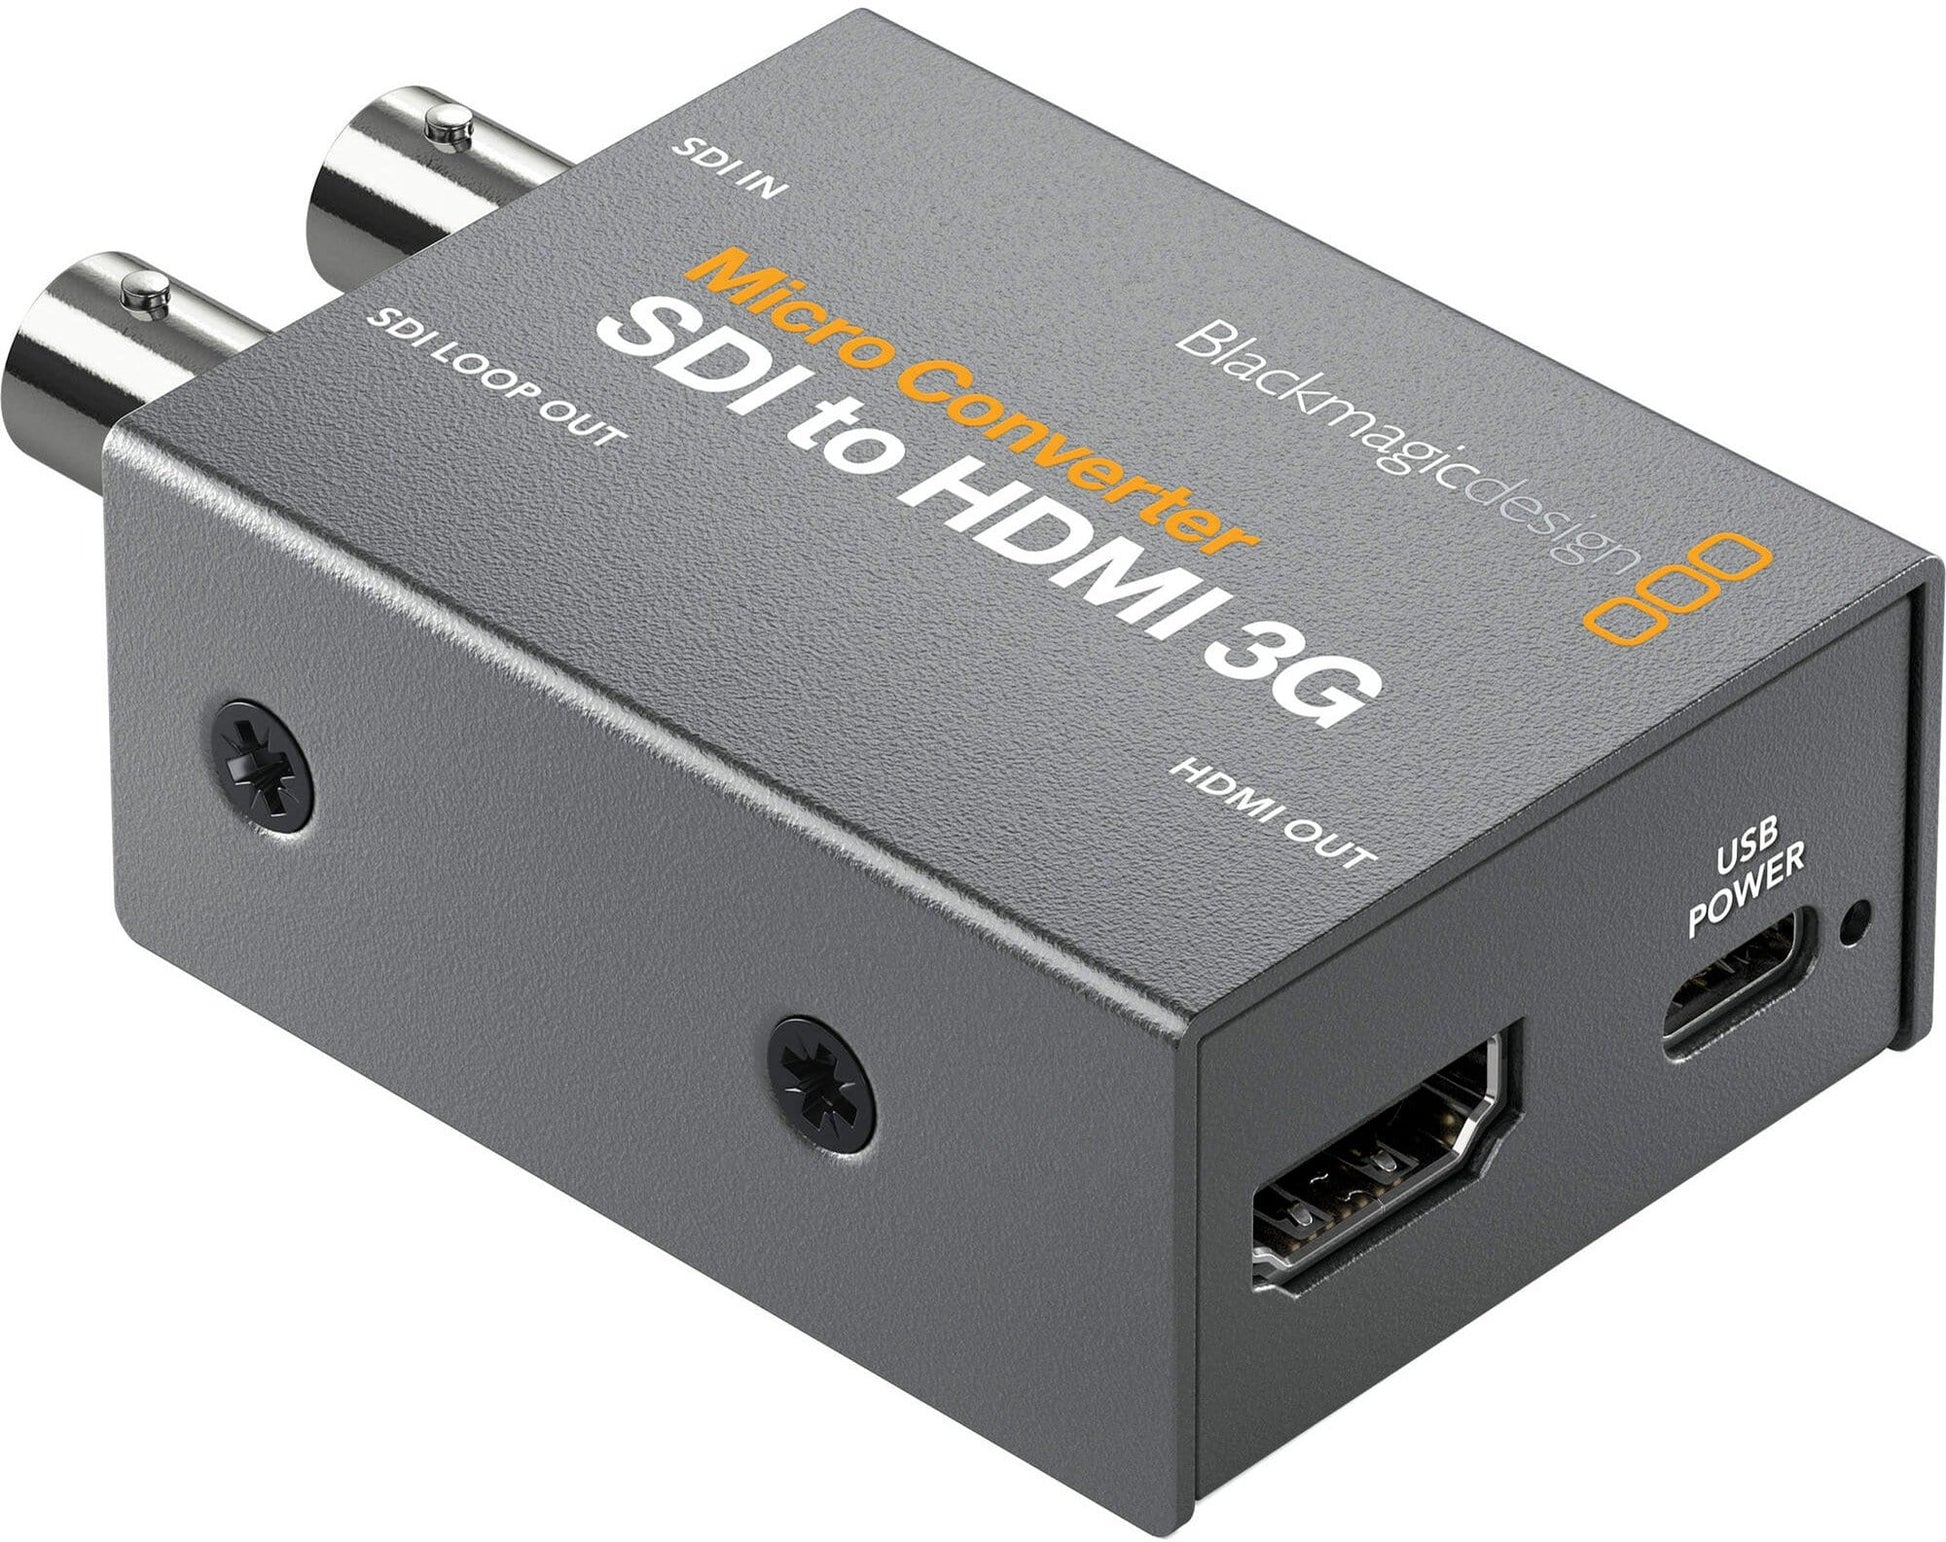 Blackmagic Micro Converter SDI to HDMI 3G PSU - PSSL ProSound and Stage Lighting